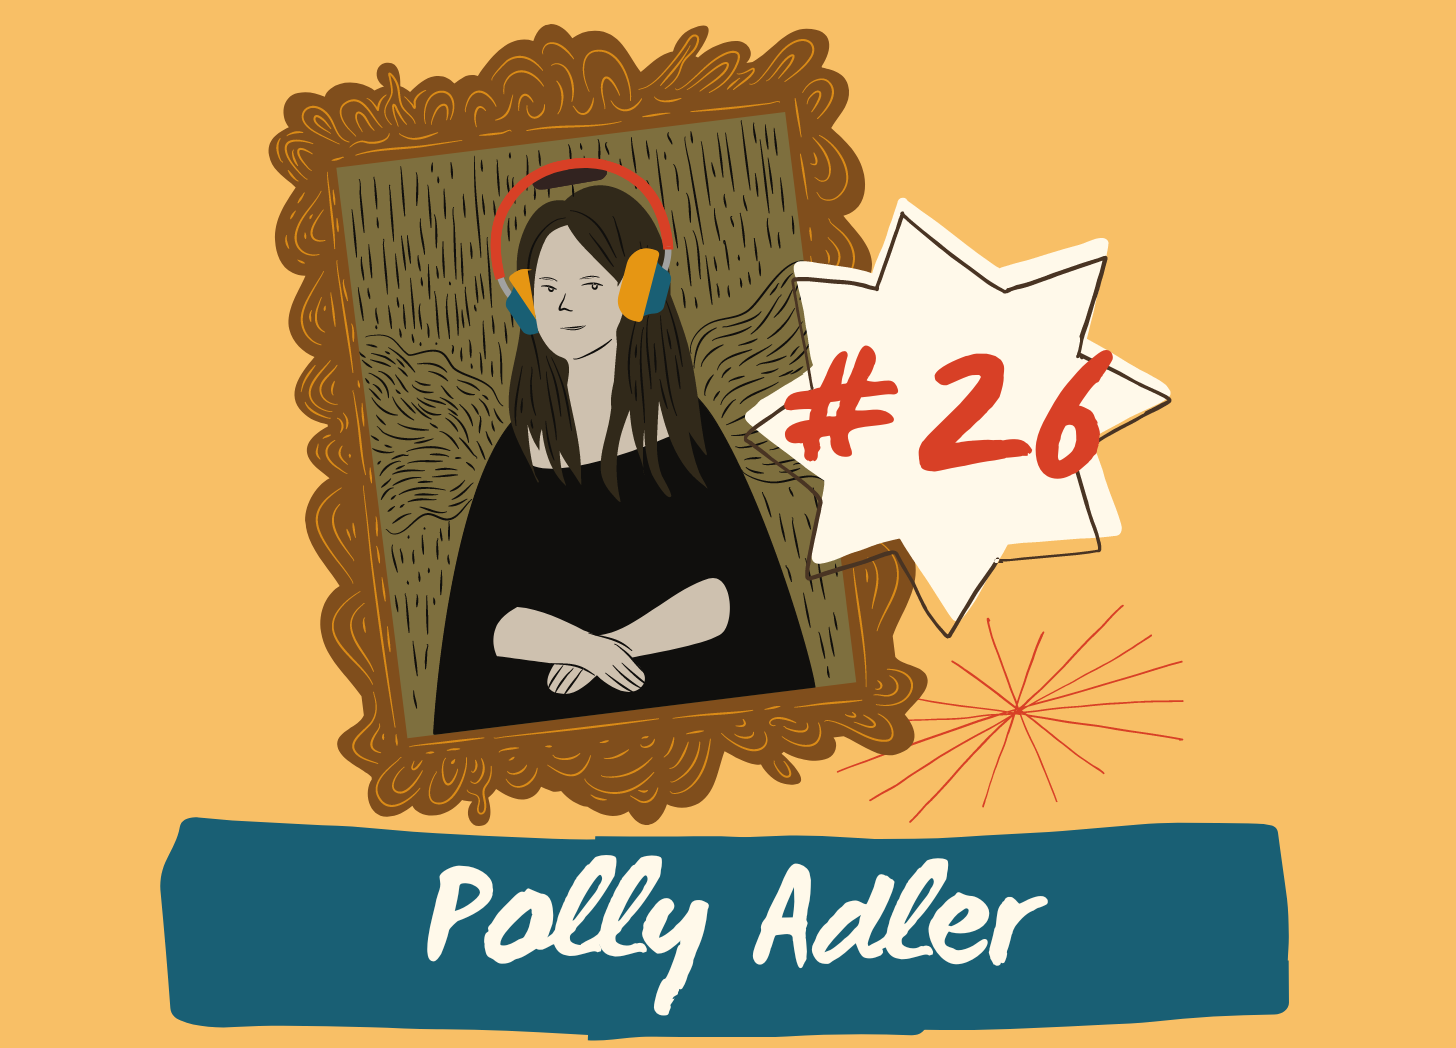 Episode 26 Polly Adler - by Valorie Clark